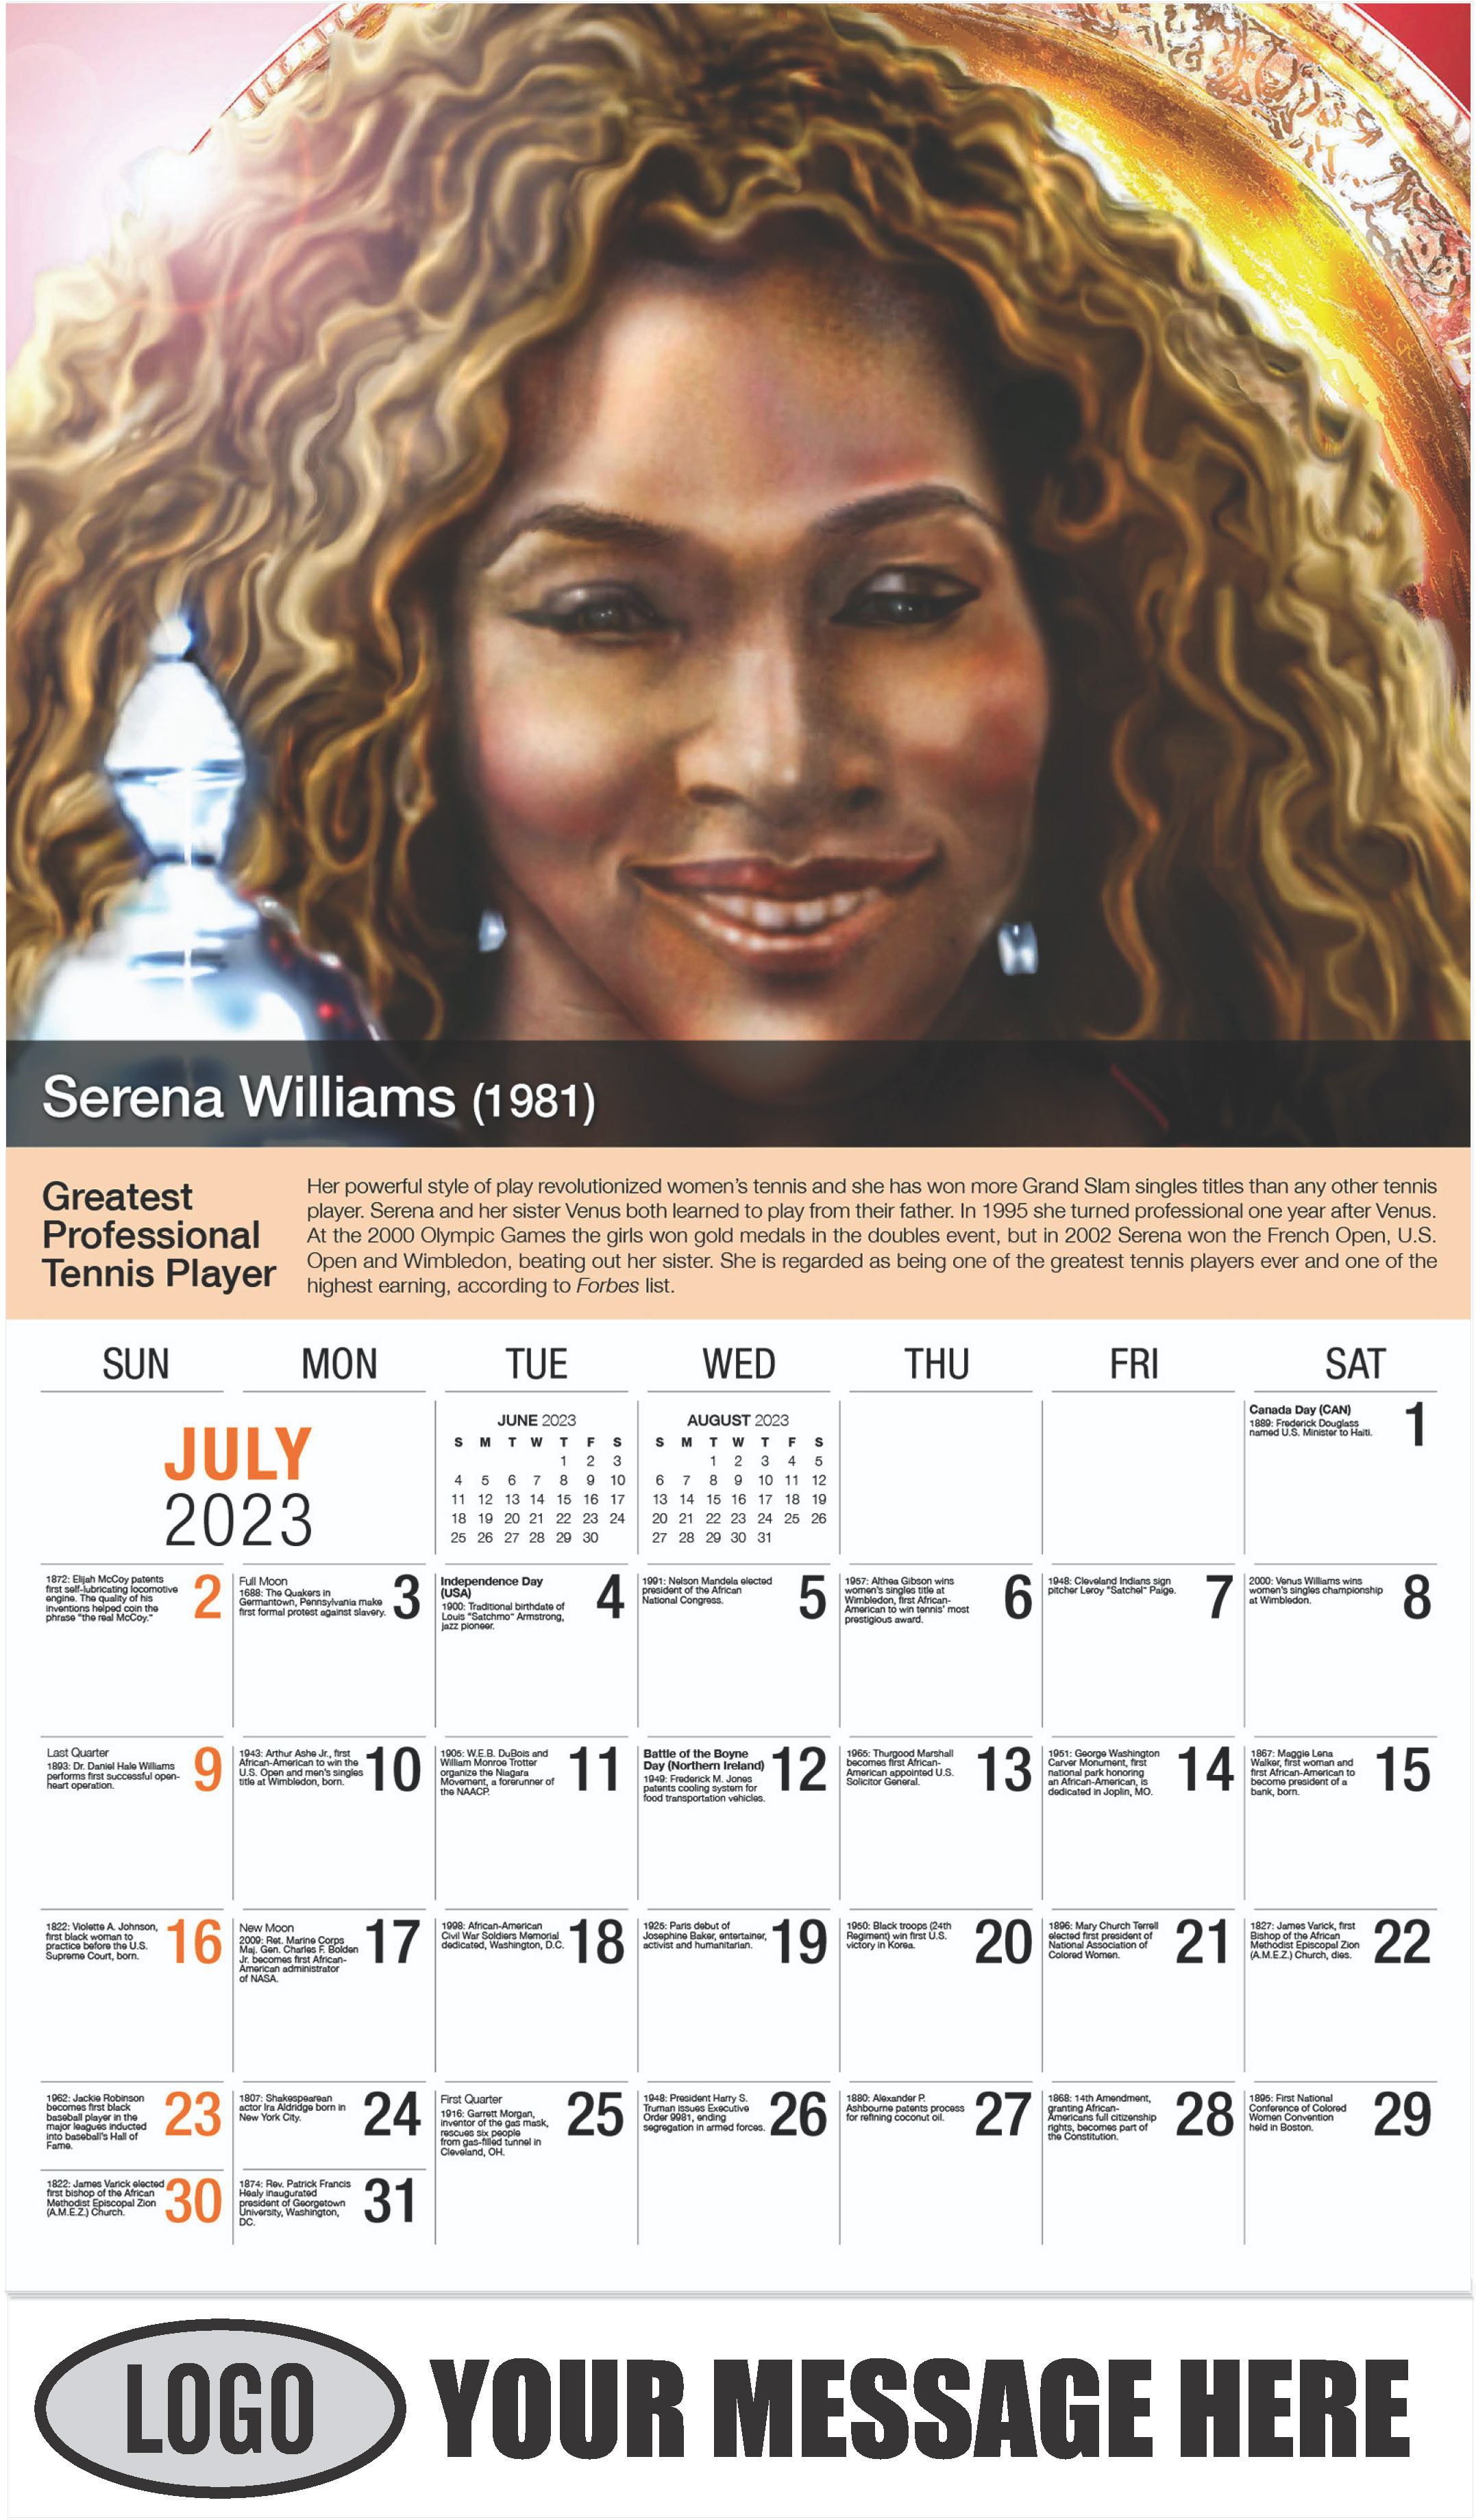 Serena Williams - July - Black History 2023 Promotional Calendar